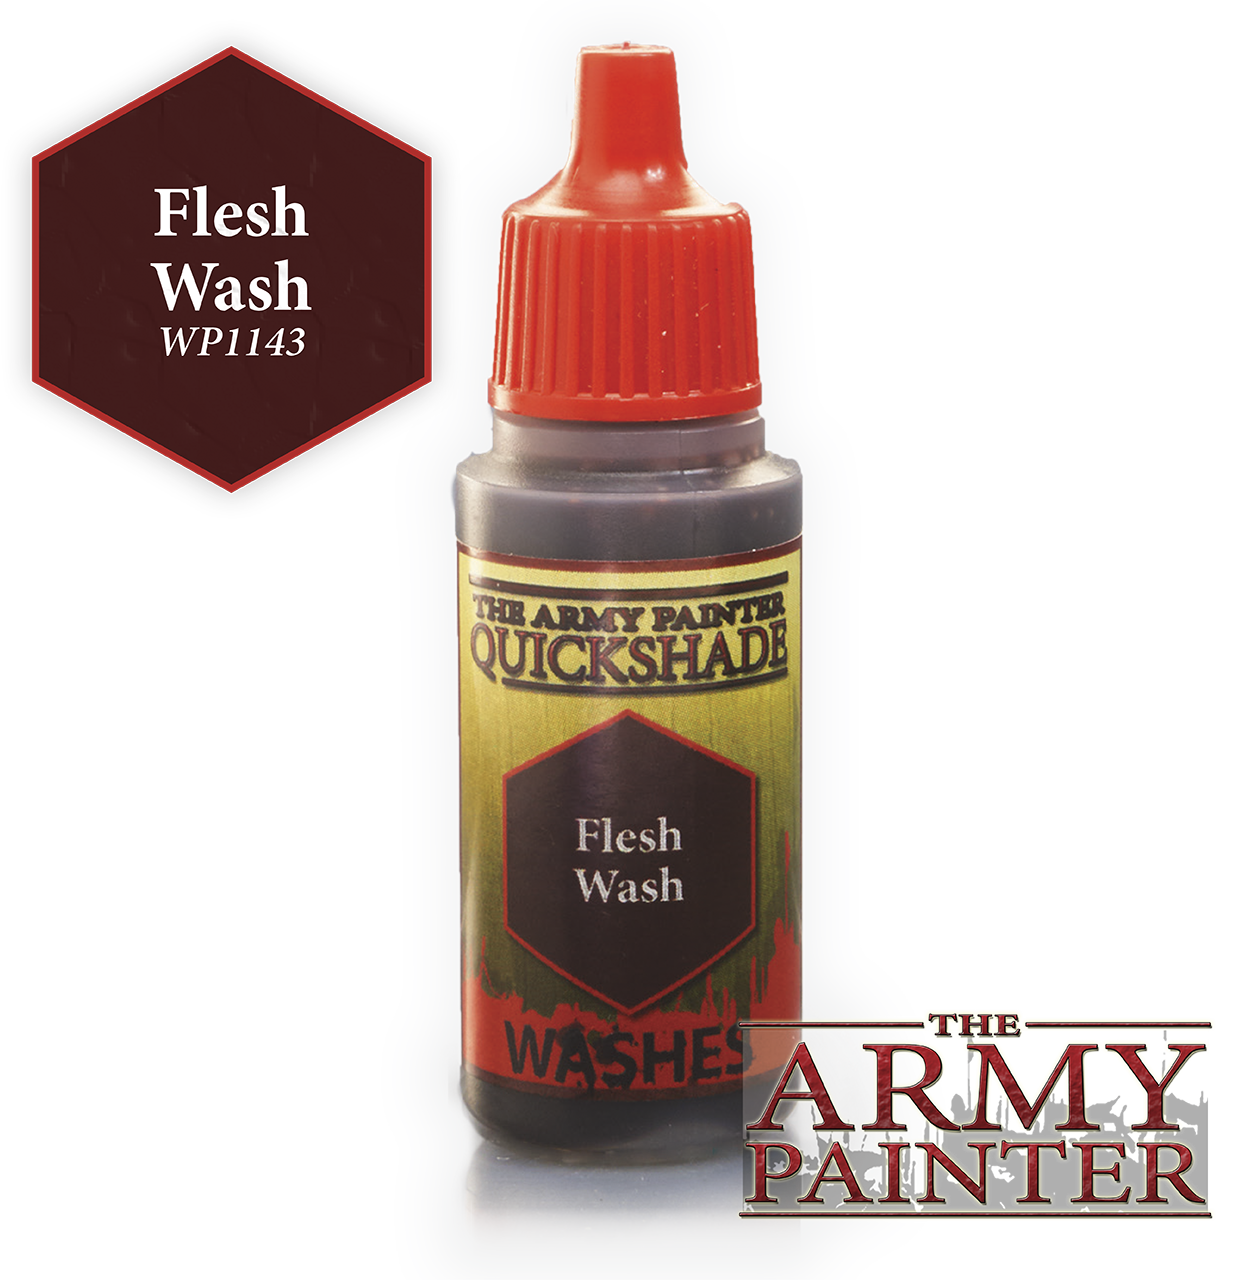 army painter flesh wash